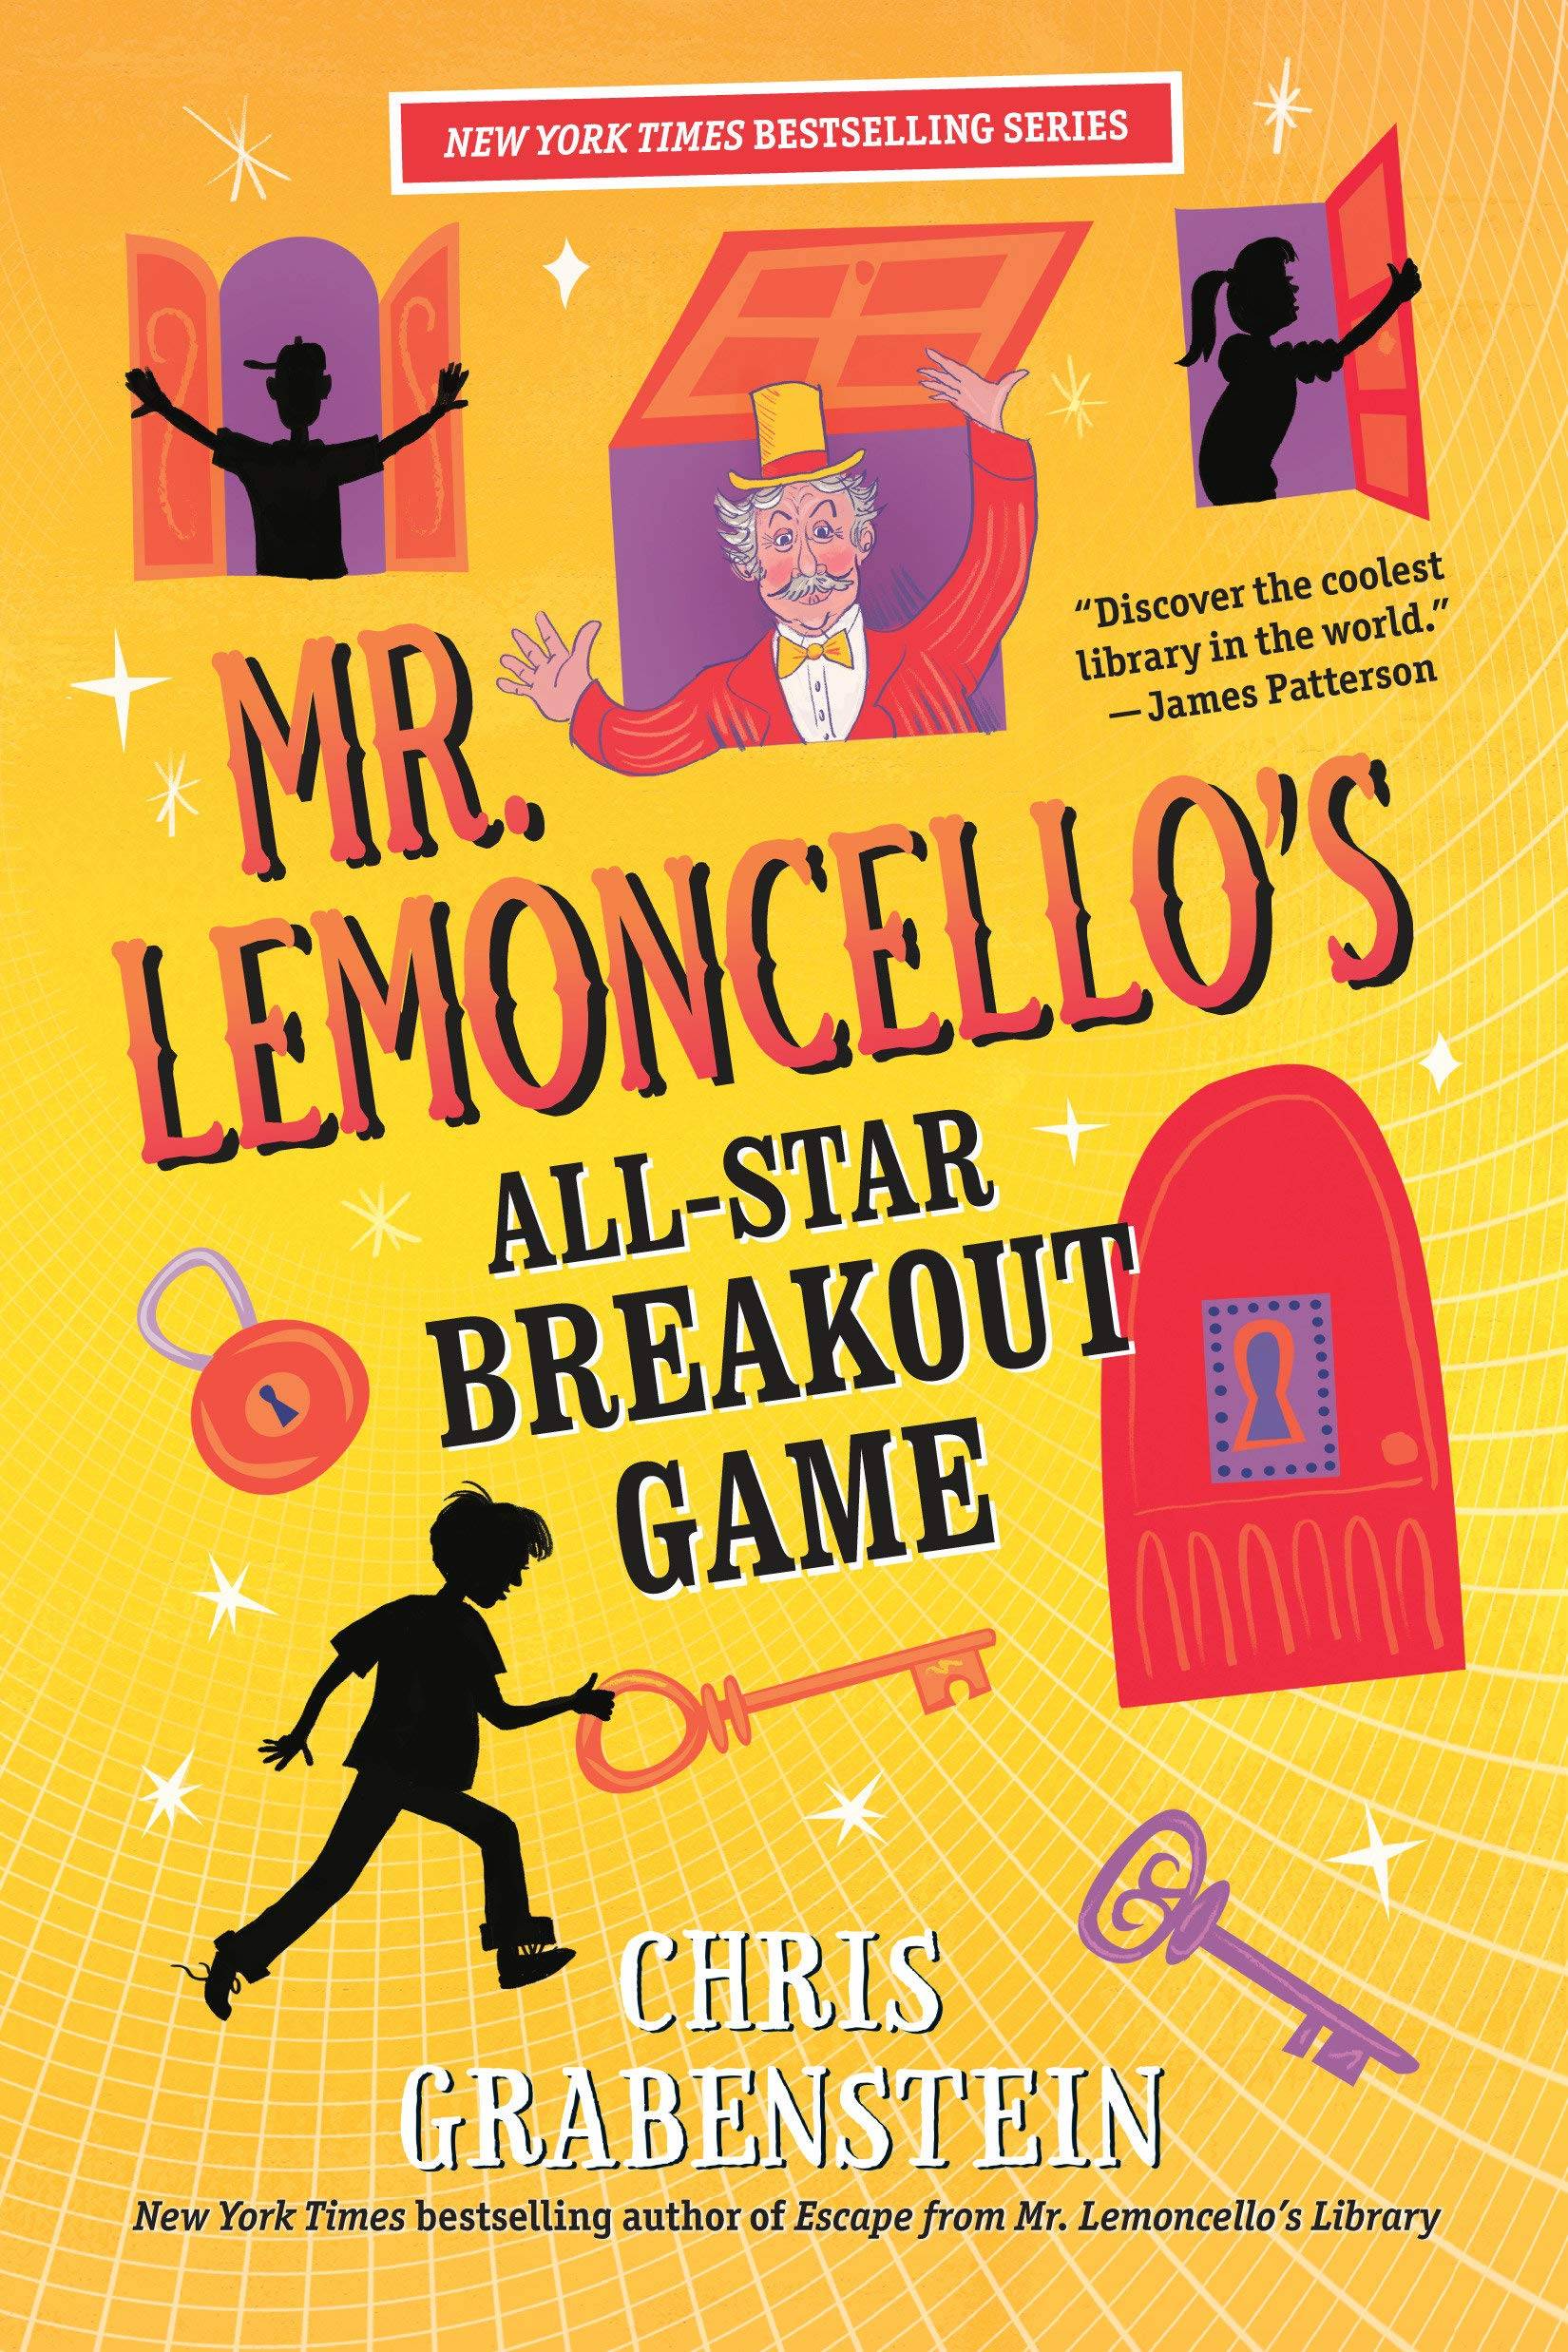 IMG : Mr. Lemoncello's All-Star Breakout Game #4